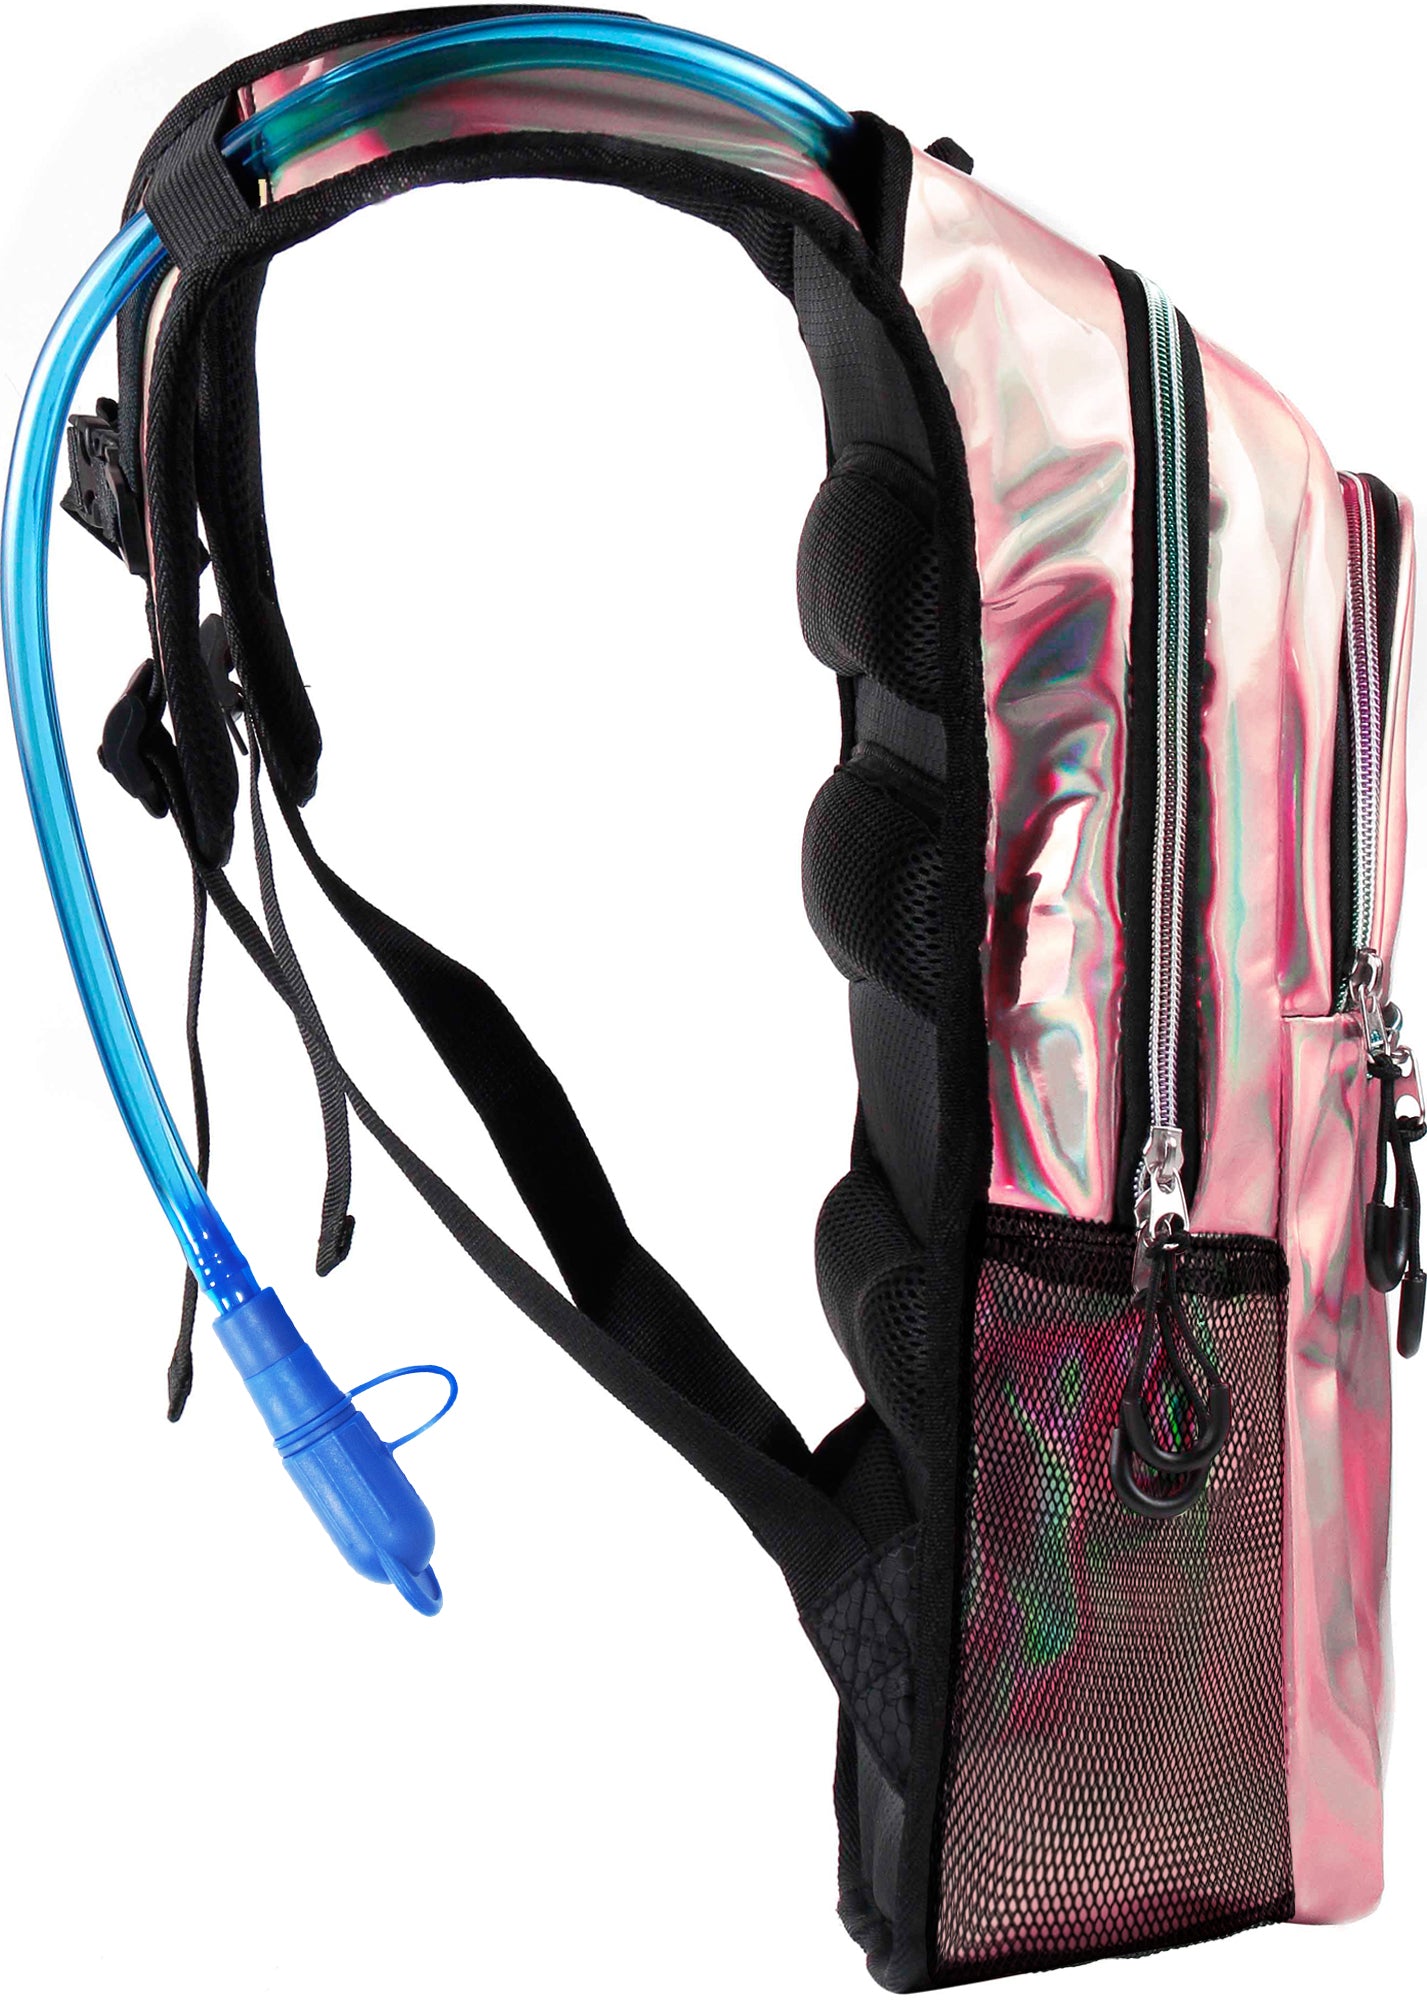 Fanny Pack Medium Hydration Pack Backpack - 2L Water Bladder - Holographic - Pink - SoJourner Bags